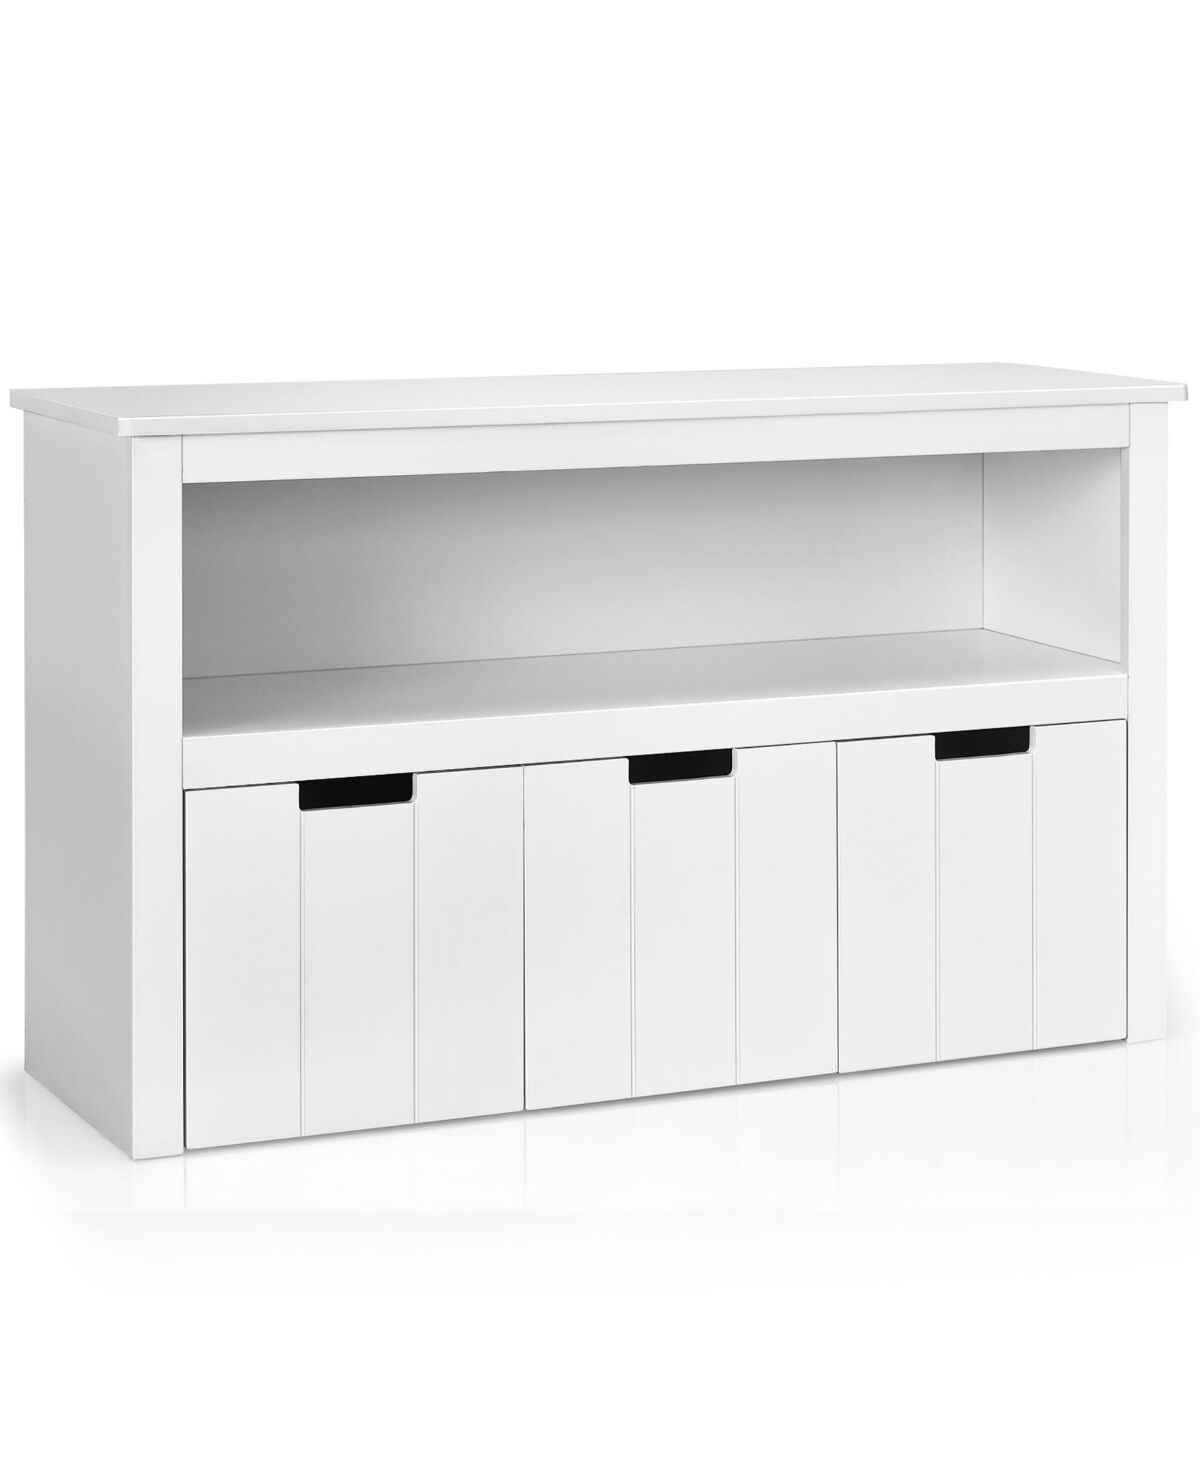 Costway Kid Toy Storage Cabinet 3 Drawer Chest w/Wheels Large Storage Cube Shelf - White